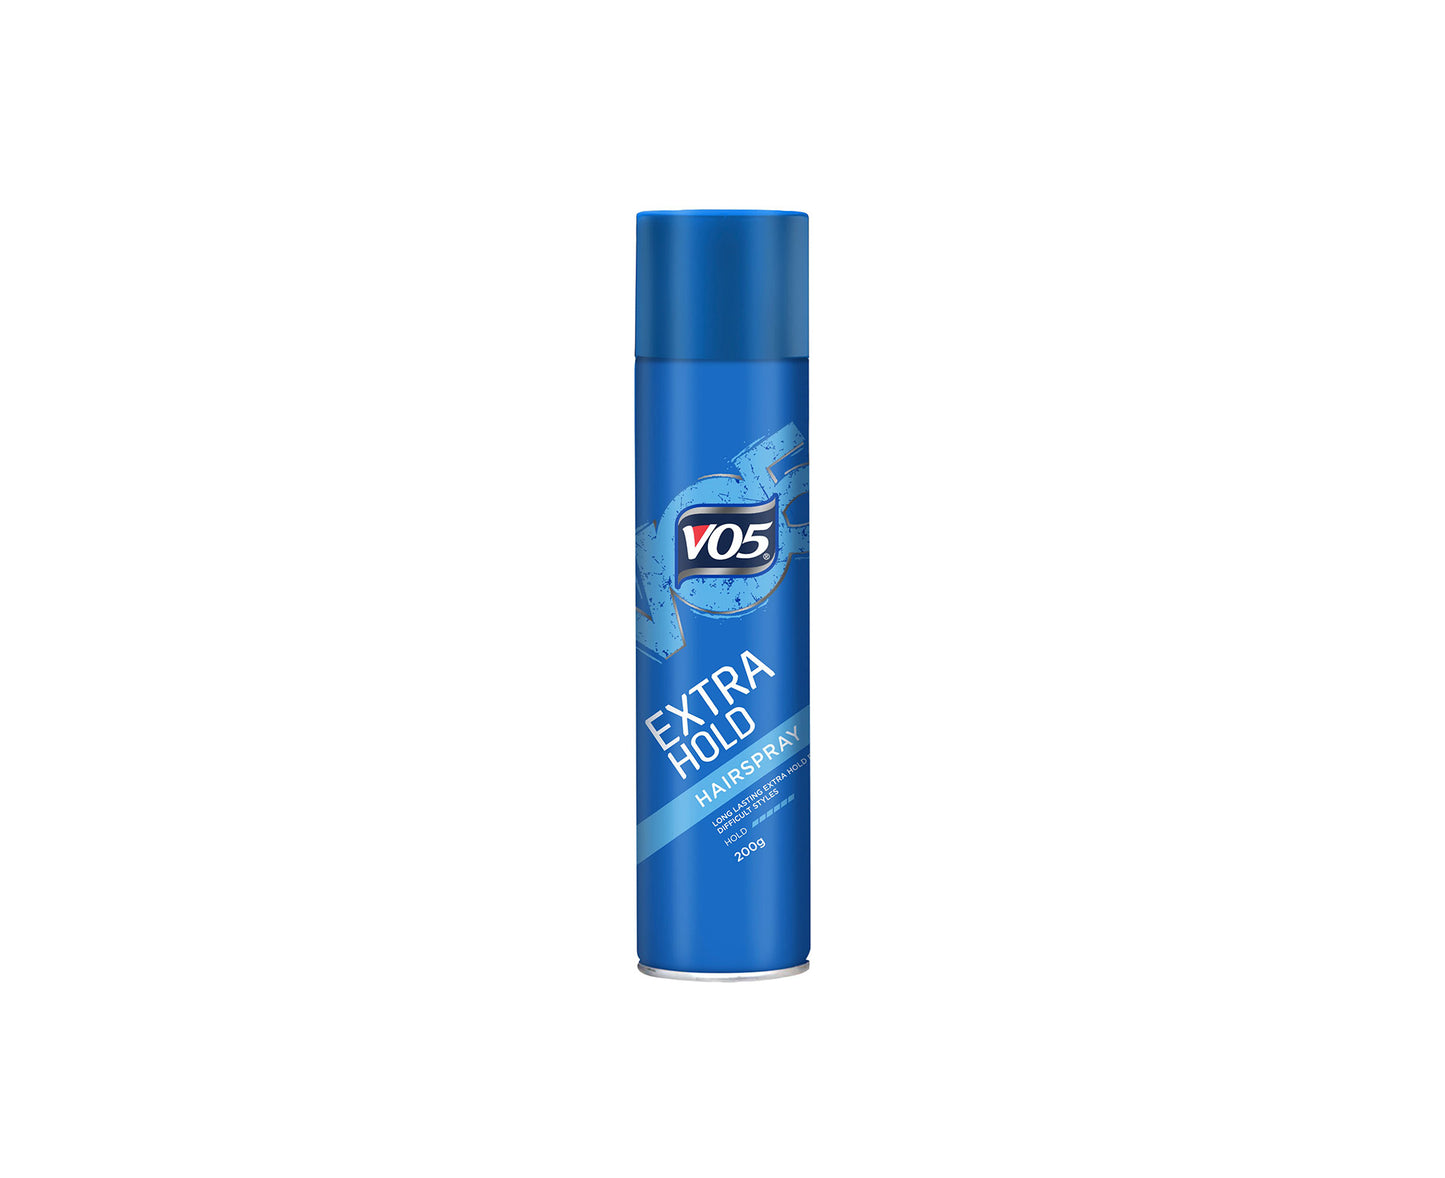 Vo5 Hairspray Extra Firm 200g